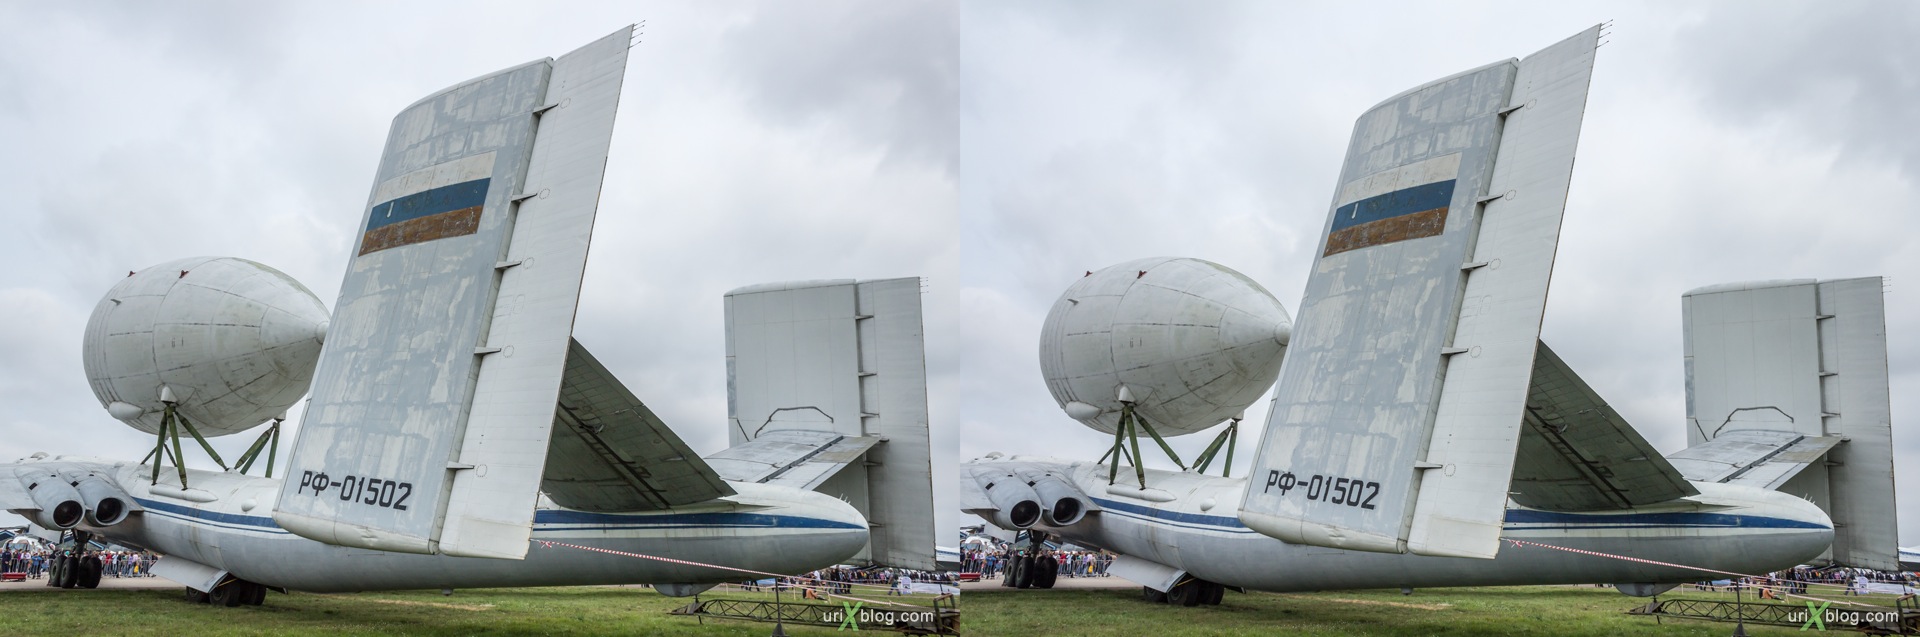 2013, VM-T Atlant, MAKS, International Aviation and Space Salon, Russia, Ramenskoye airfield, airplane, 3D, stereo pair, cross-eyed, crossview, cross view stereo pair, stereoscopic